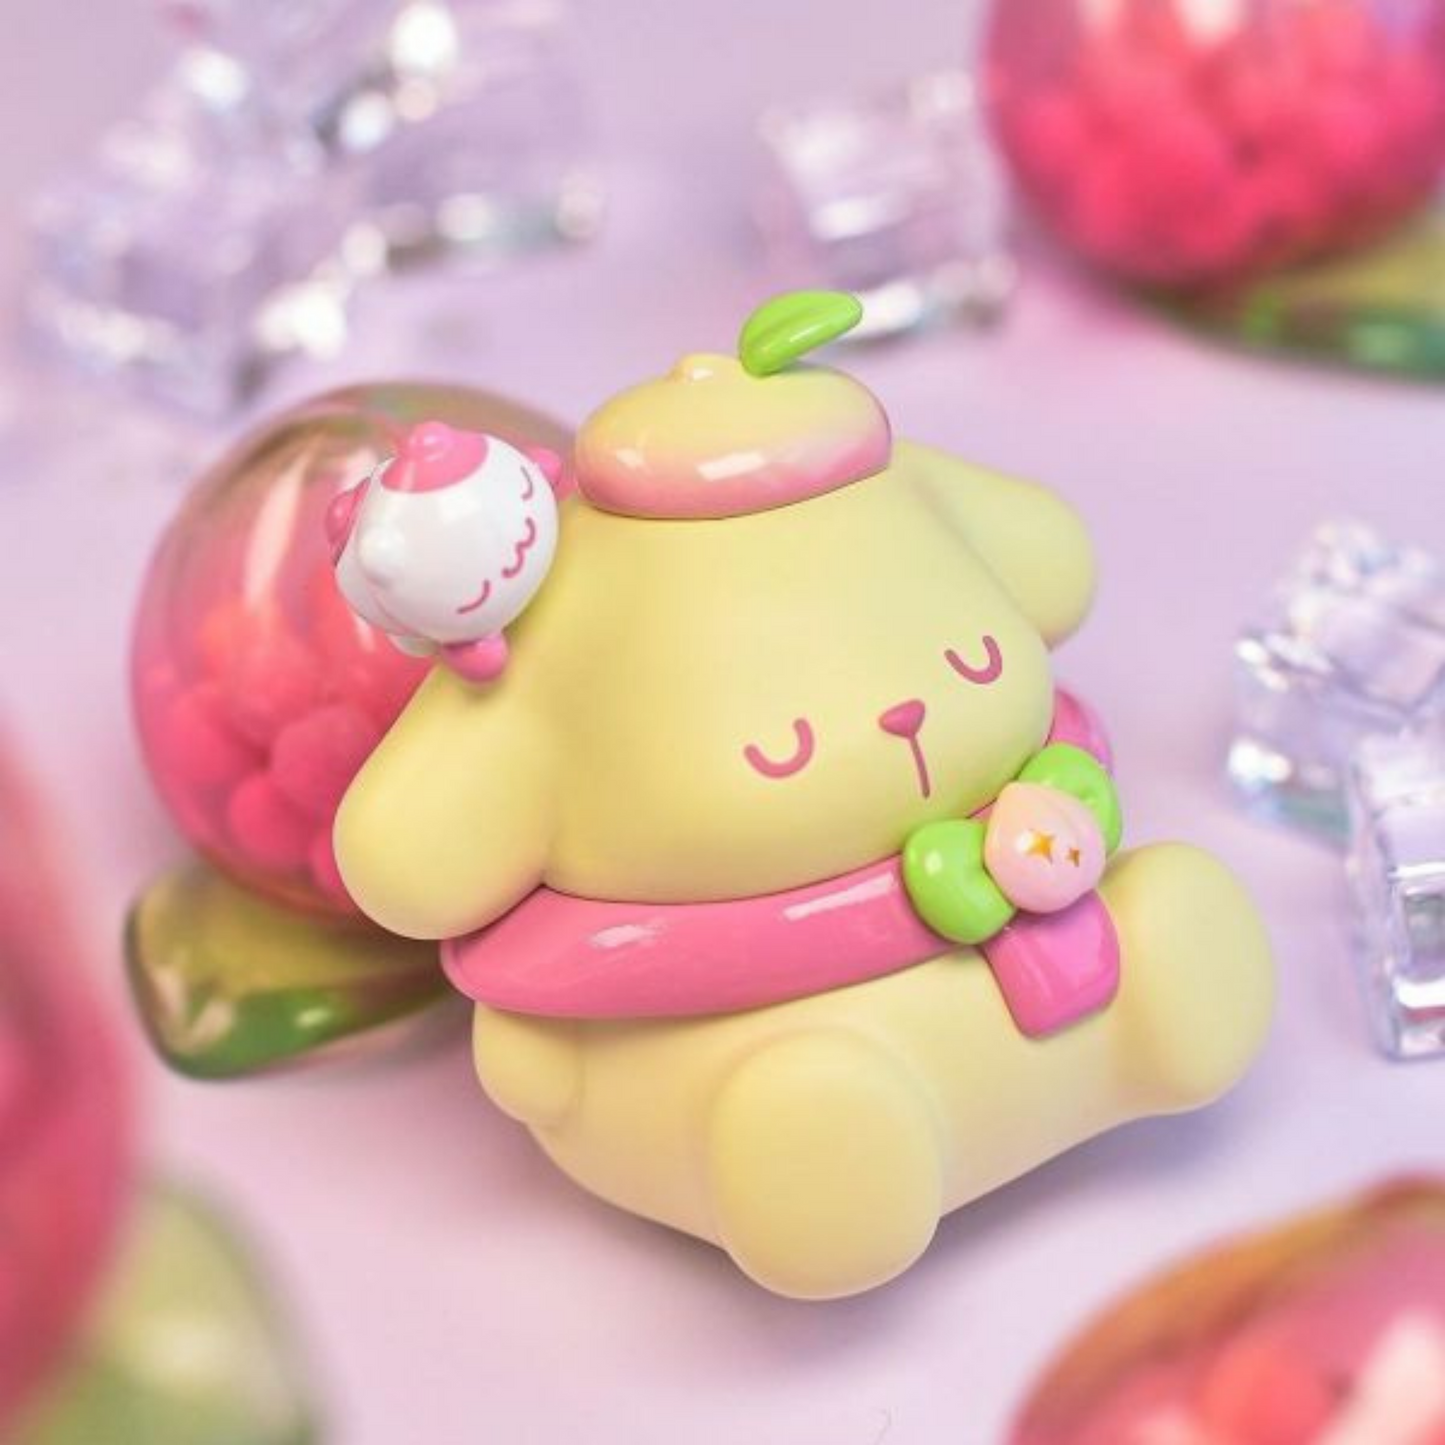 【Restock】Top Toy Sanrio Characters: Vitality Peach Paradise Series Blind Box Random Style